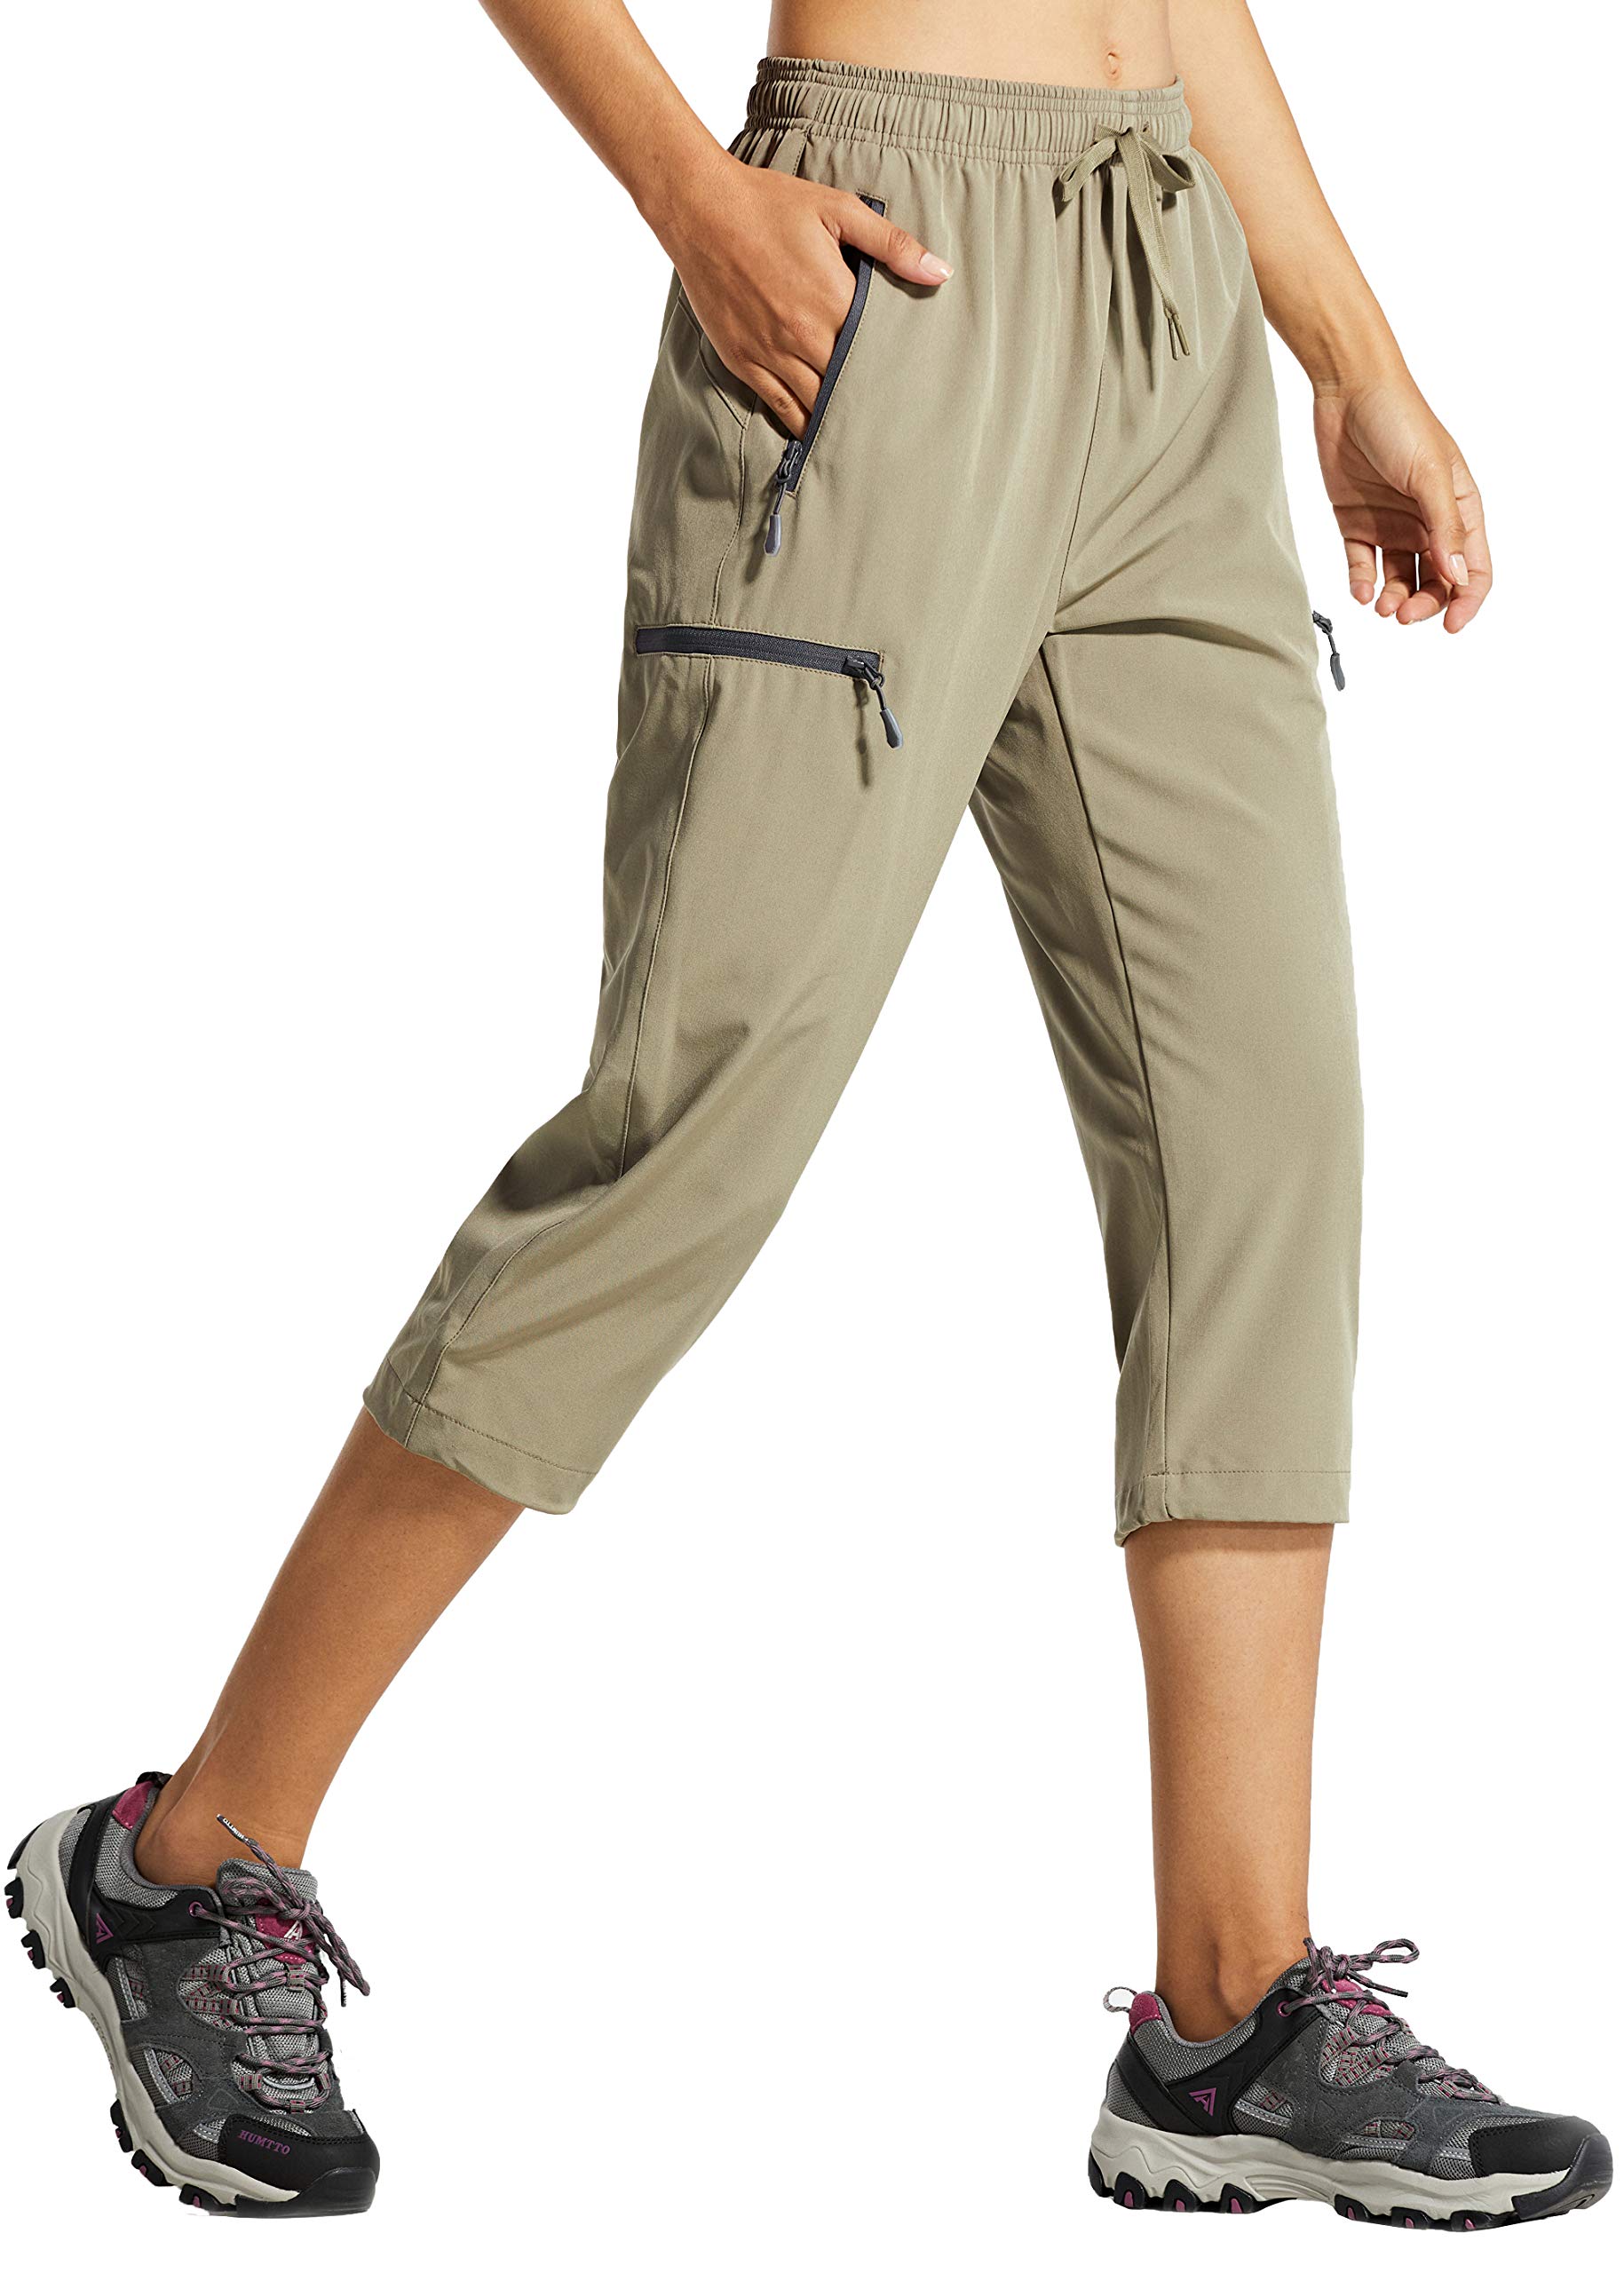 Libin Women's Quick Dry Hiking Capri Pants Lightweight Cargo Cropped Pants Water Resistant Outdoor Casual, Khaki M